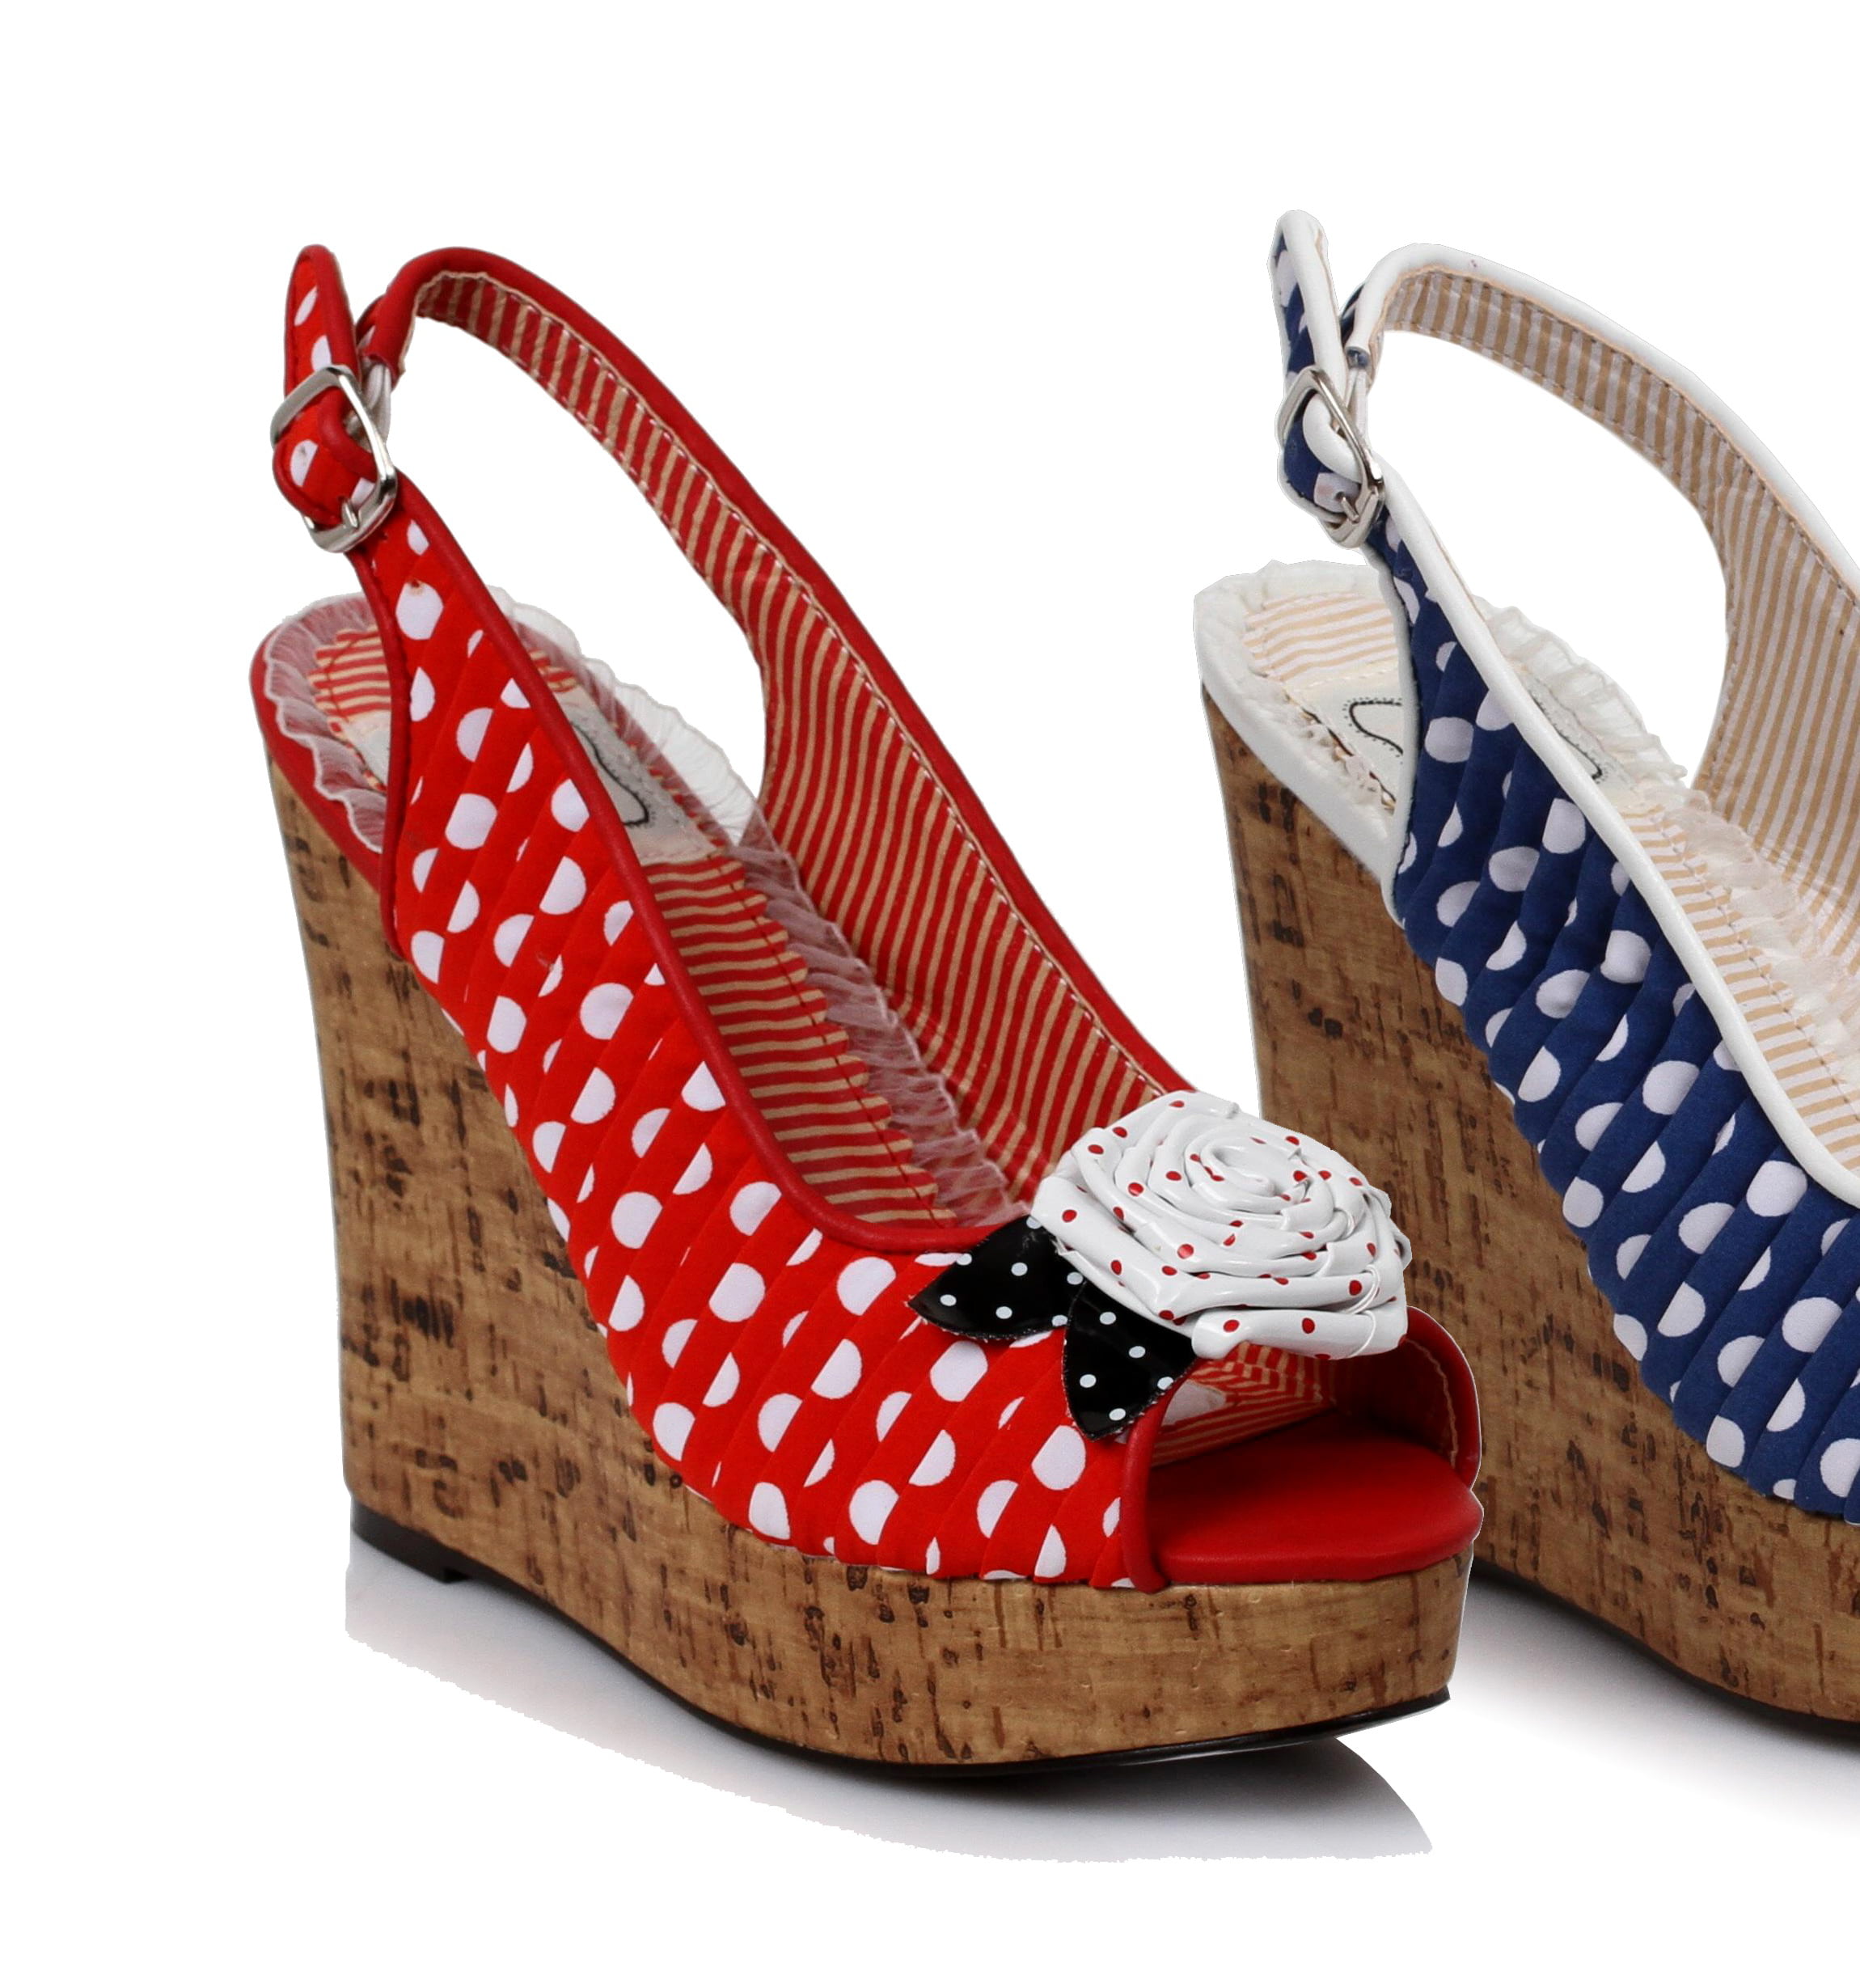 Details about   New women open toe buckle wedge high heel polka dot summer sandal Platform shoes 